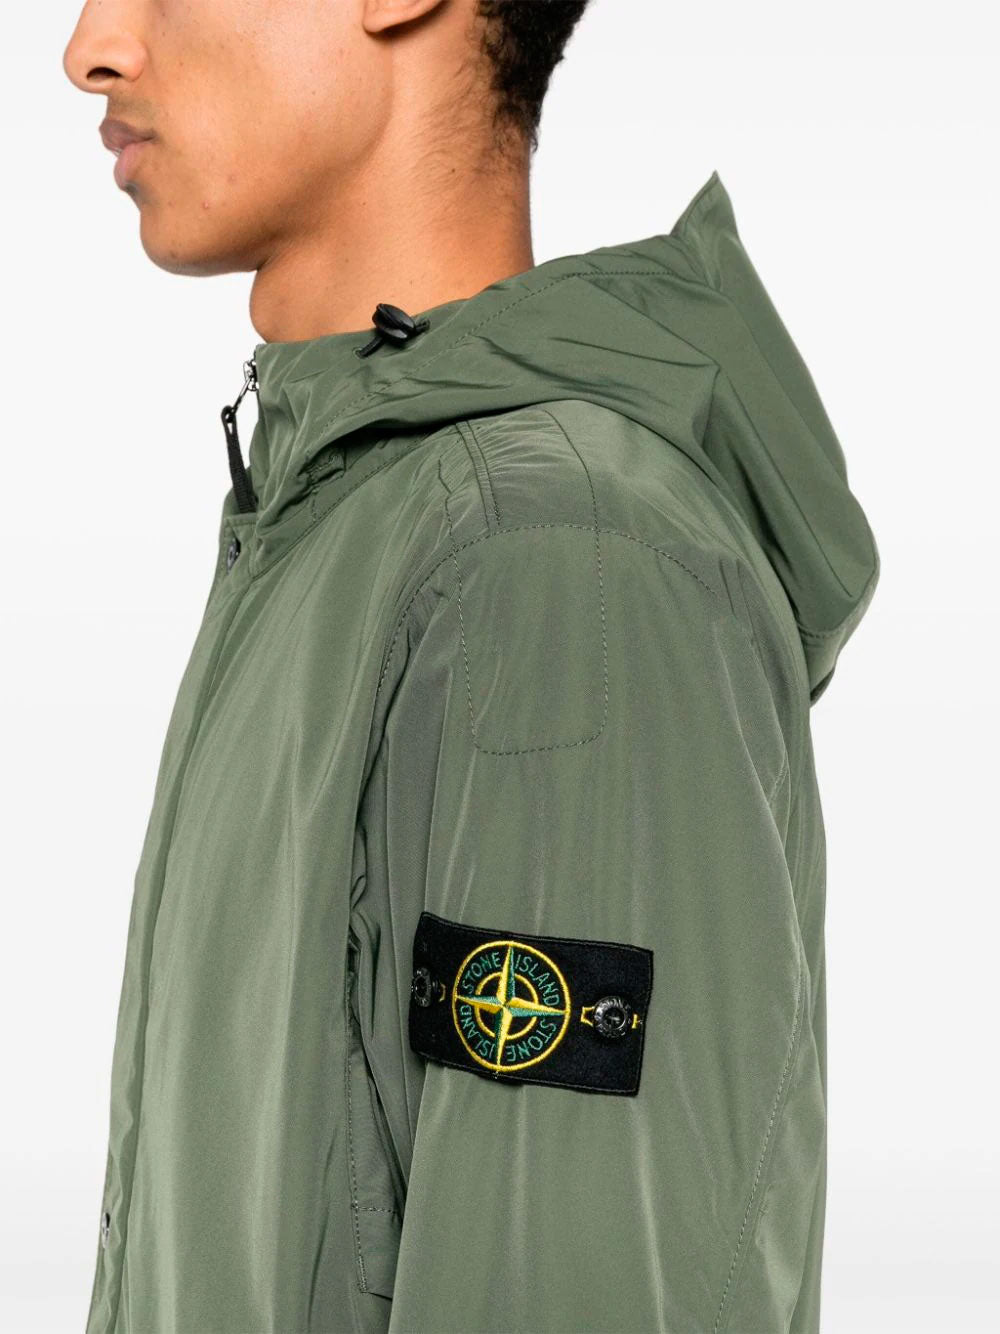 Compass-badge jacket